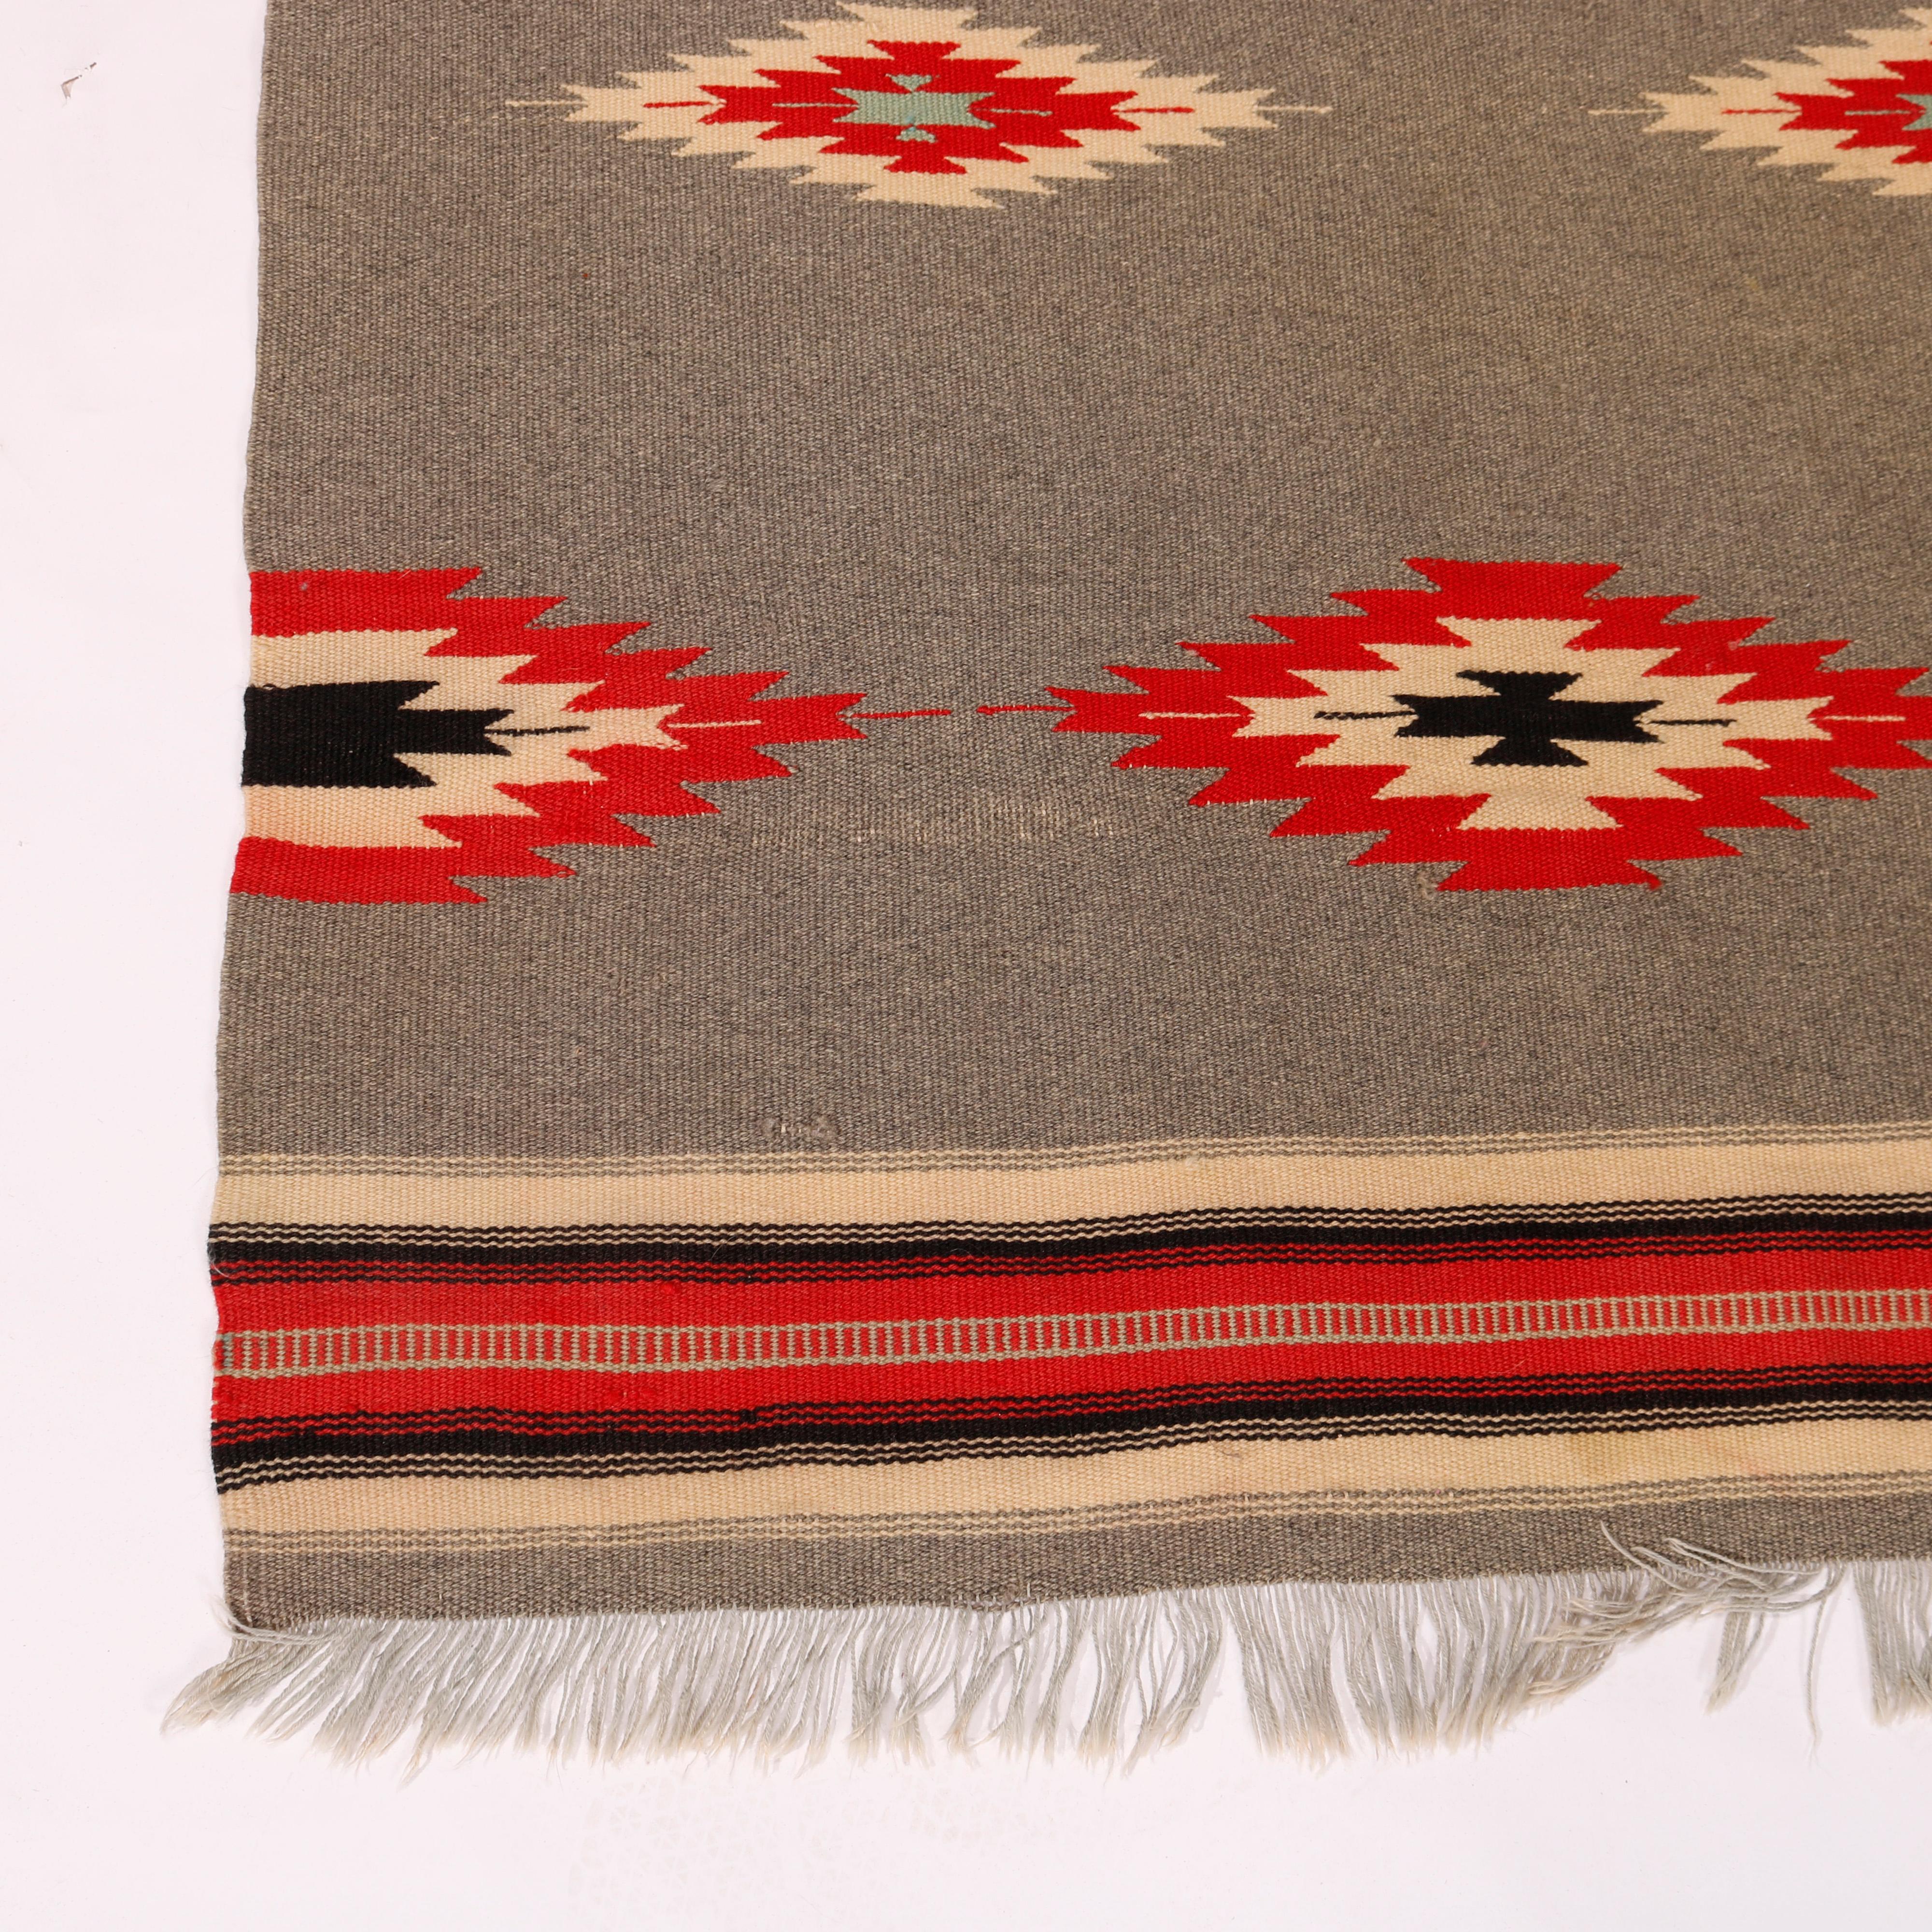 20th Century Southwestern American Indian Navajo Hand Woven Wool Rug, Diamond Pattern, c1920